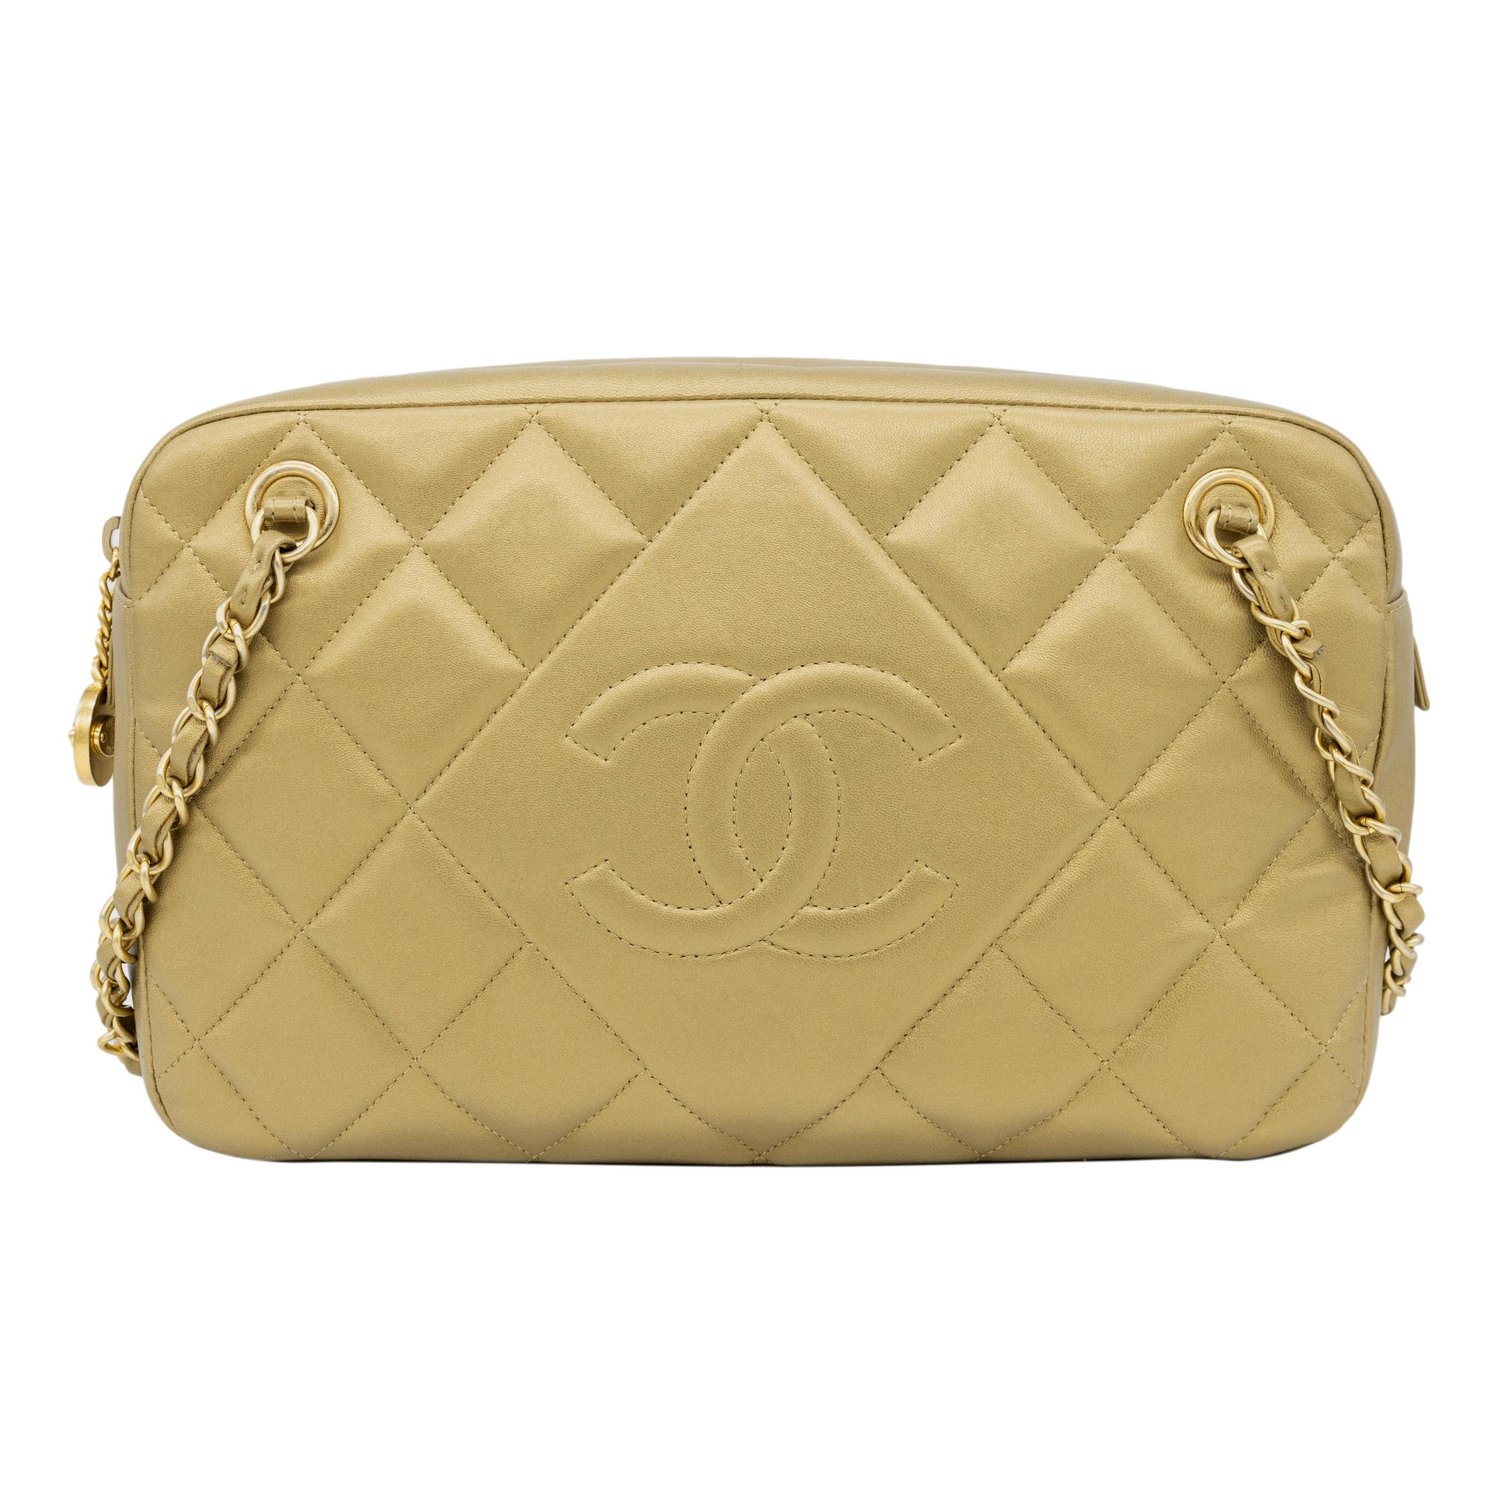 Chanel White Caviar Handbags - 54 For Sale on 1stDibs